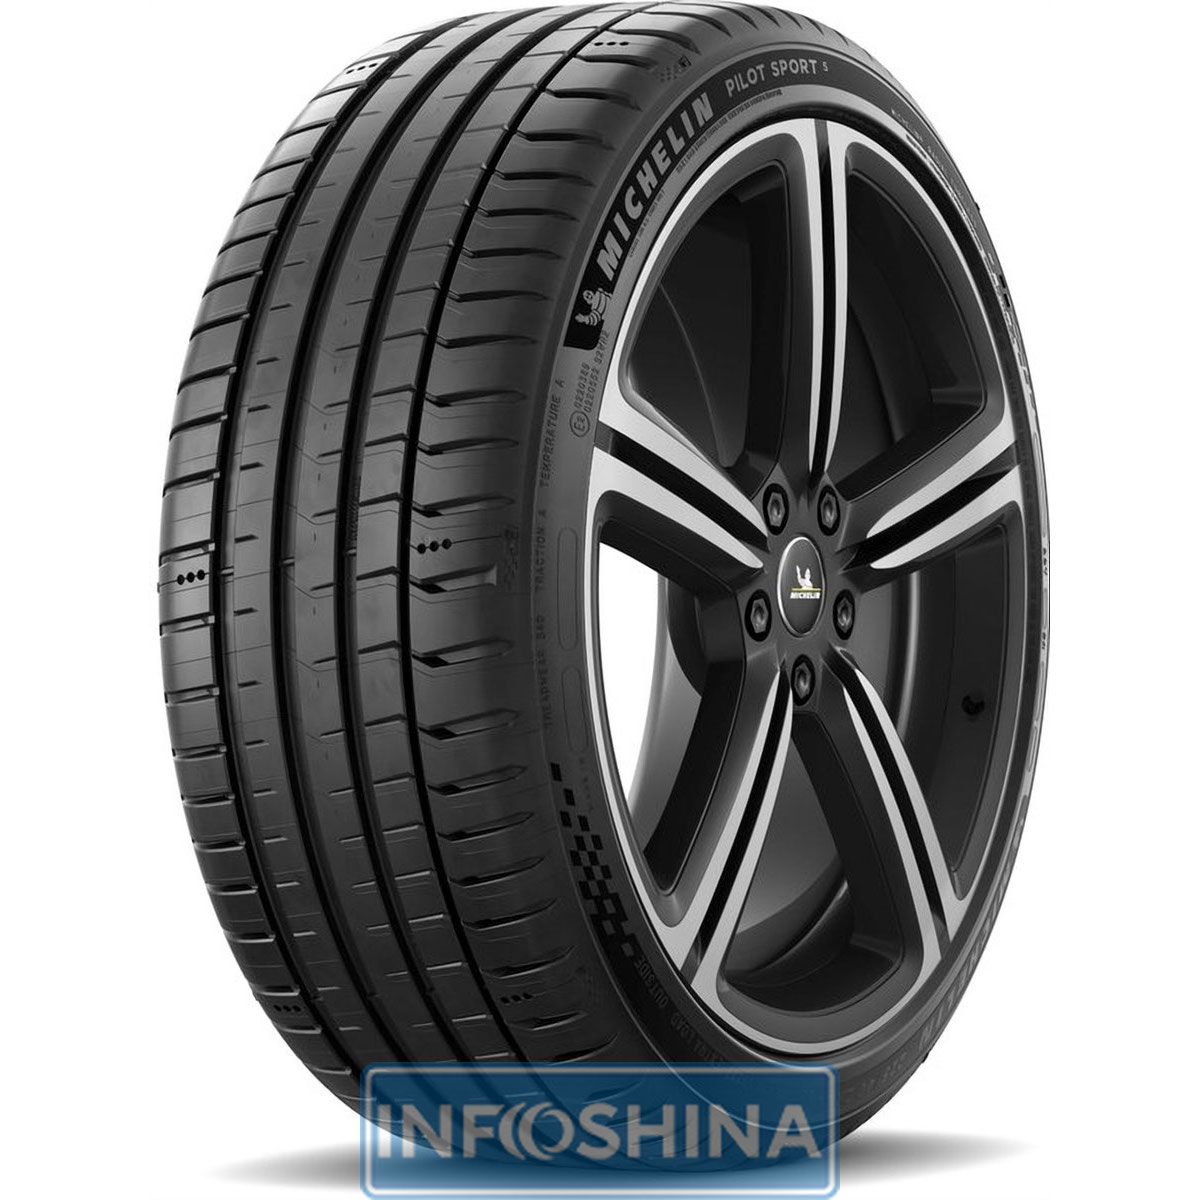 Купить шины Michelin Pilot Sport 5 245/35 R18 92Y XL